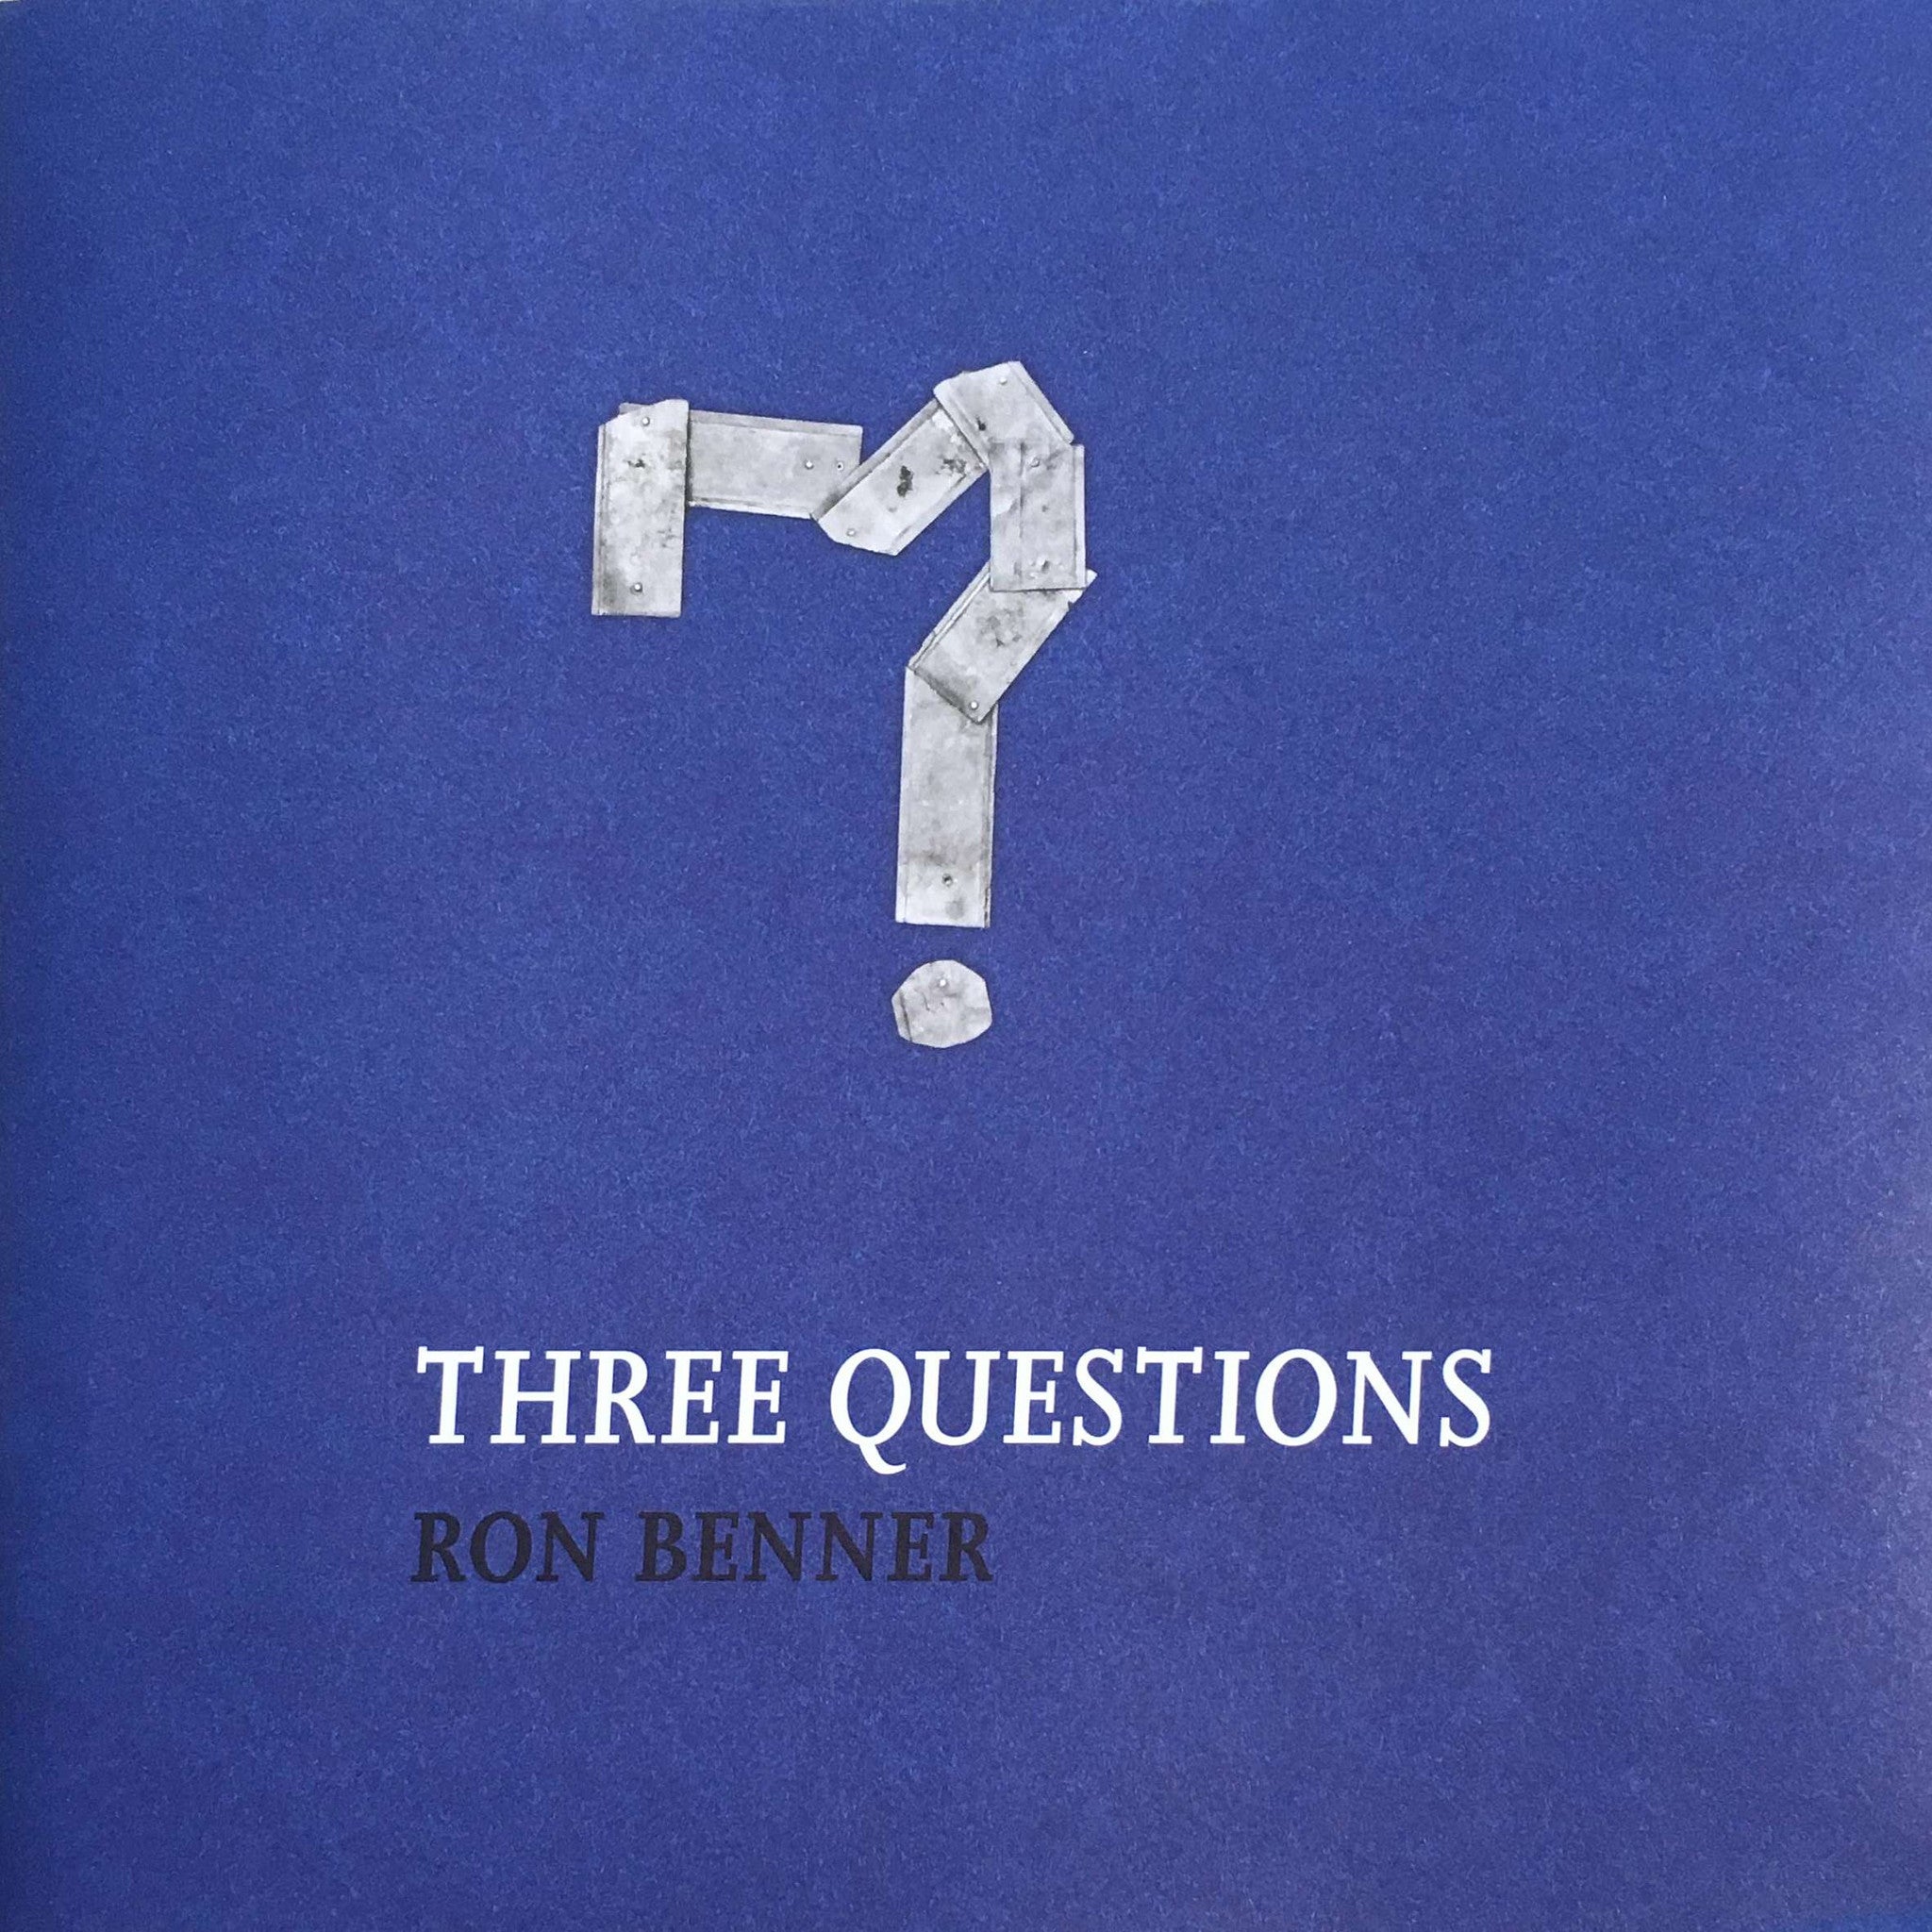 Three Questions by Ron Benner, Julian Jason (curator), Haladyn, Dot Tuer, Tony Weis